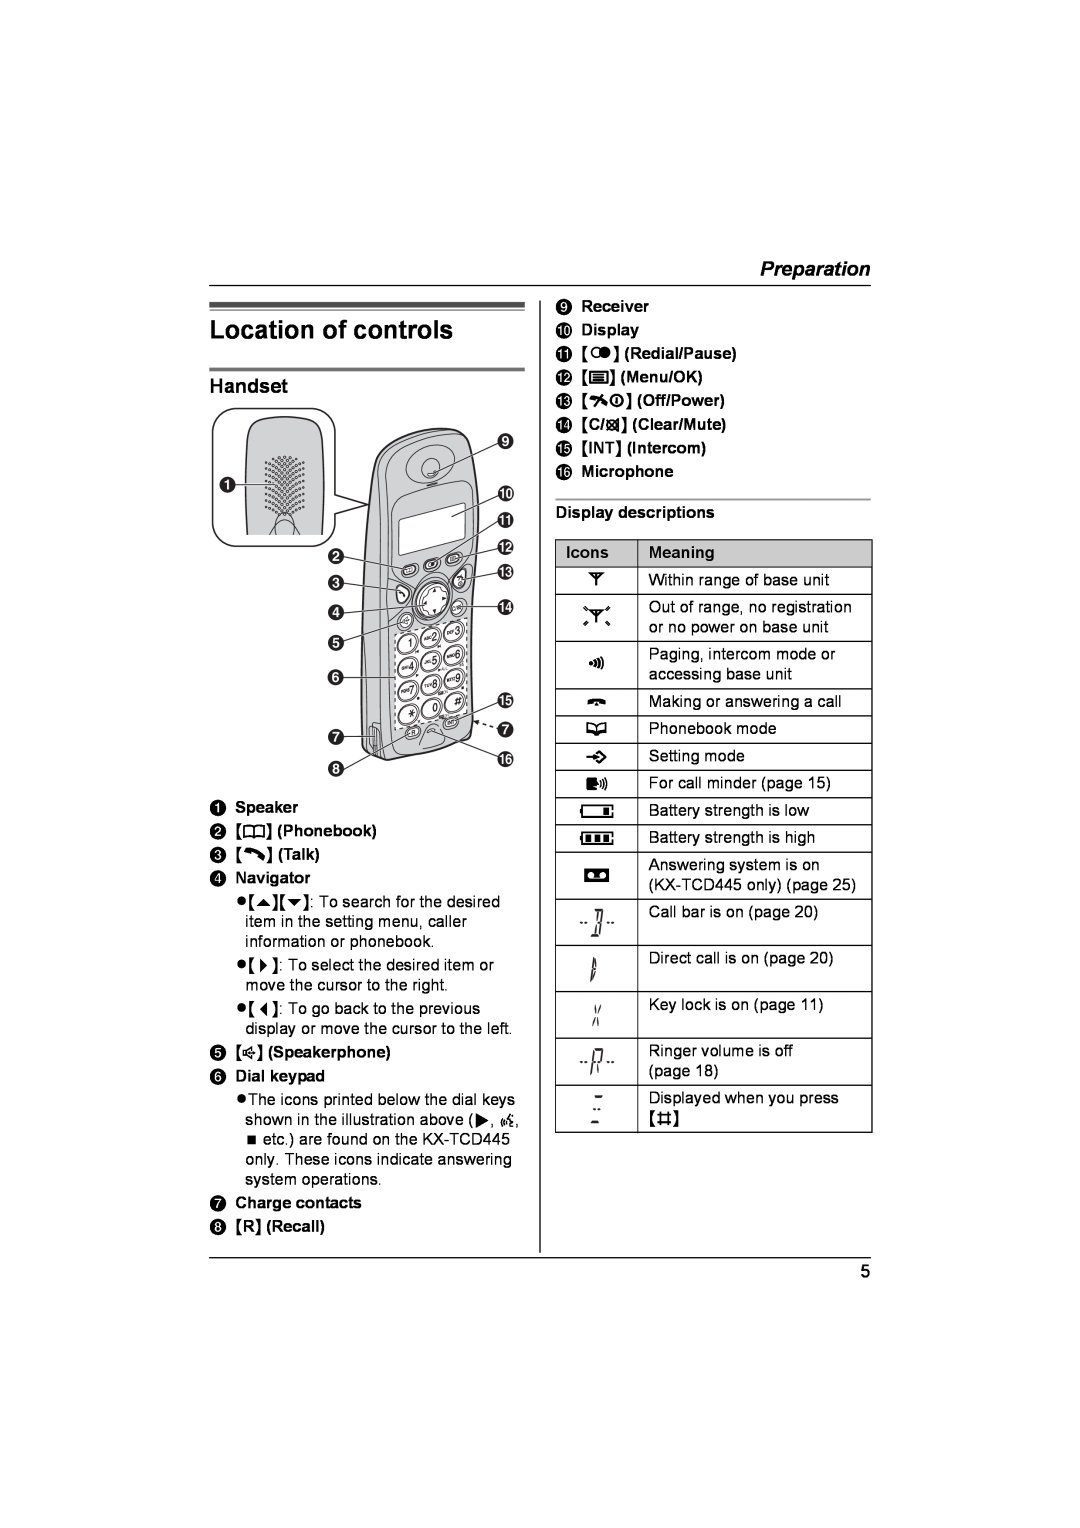 Panasonic KX-TCD440NZ Location of controls, Handset, A Speaker B k Phonebook C C Talk D Navigator, Icons, Meaning 